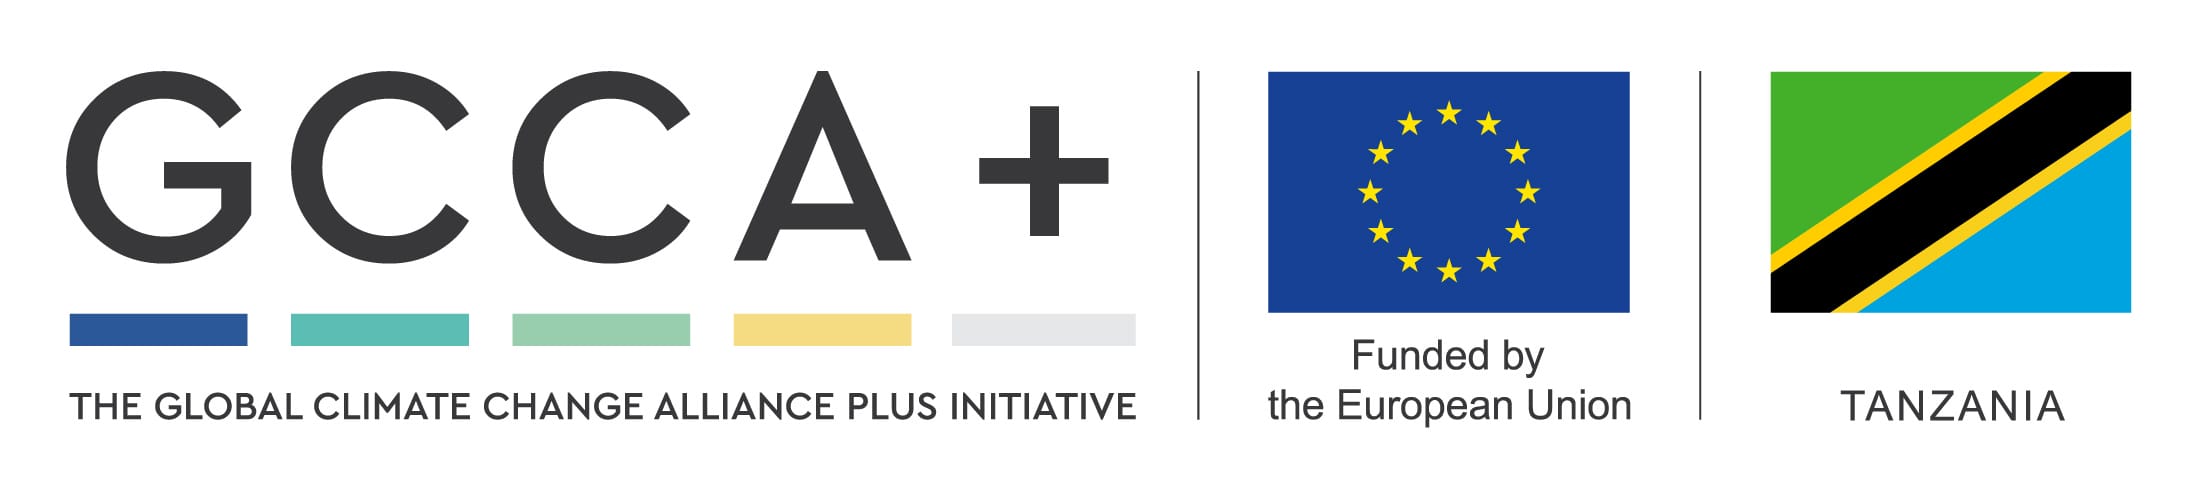 Global Climate Change Alliance Plus Initiative logo